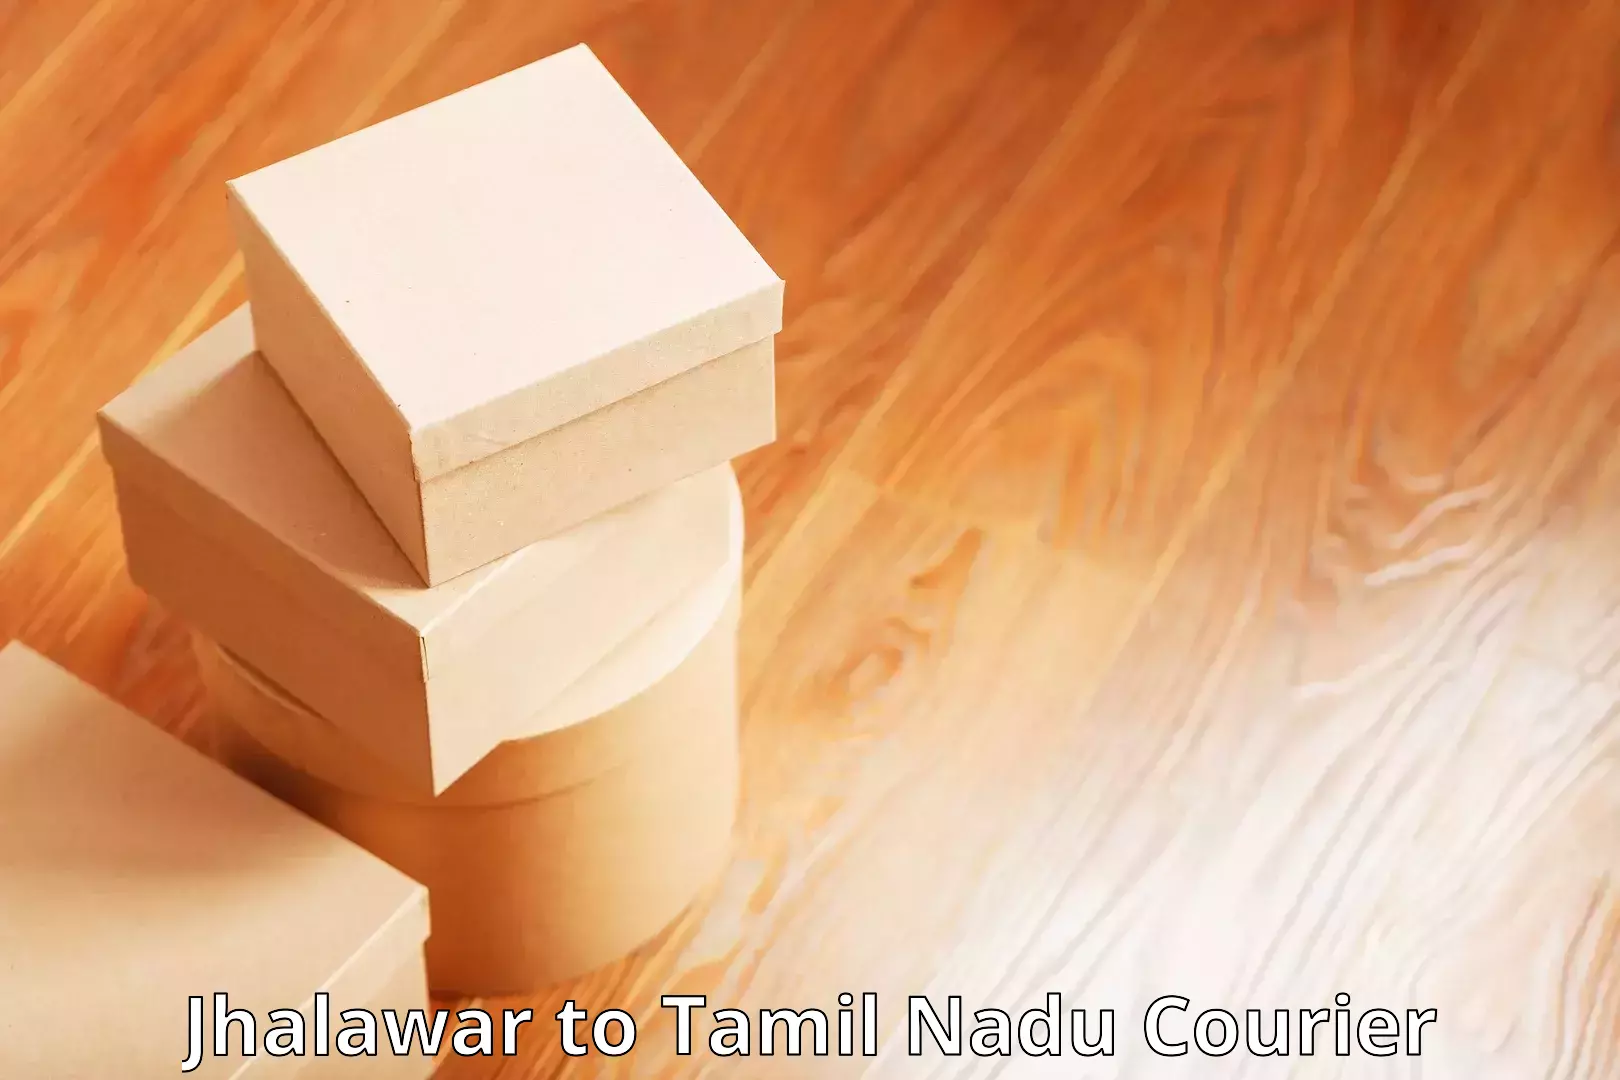 Customized shipping options Jhalawar to Tamil Nadu